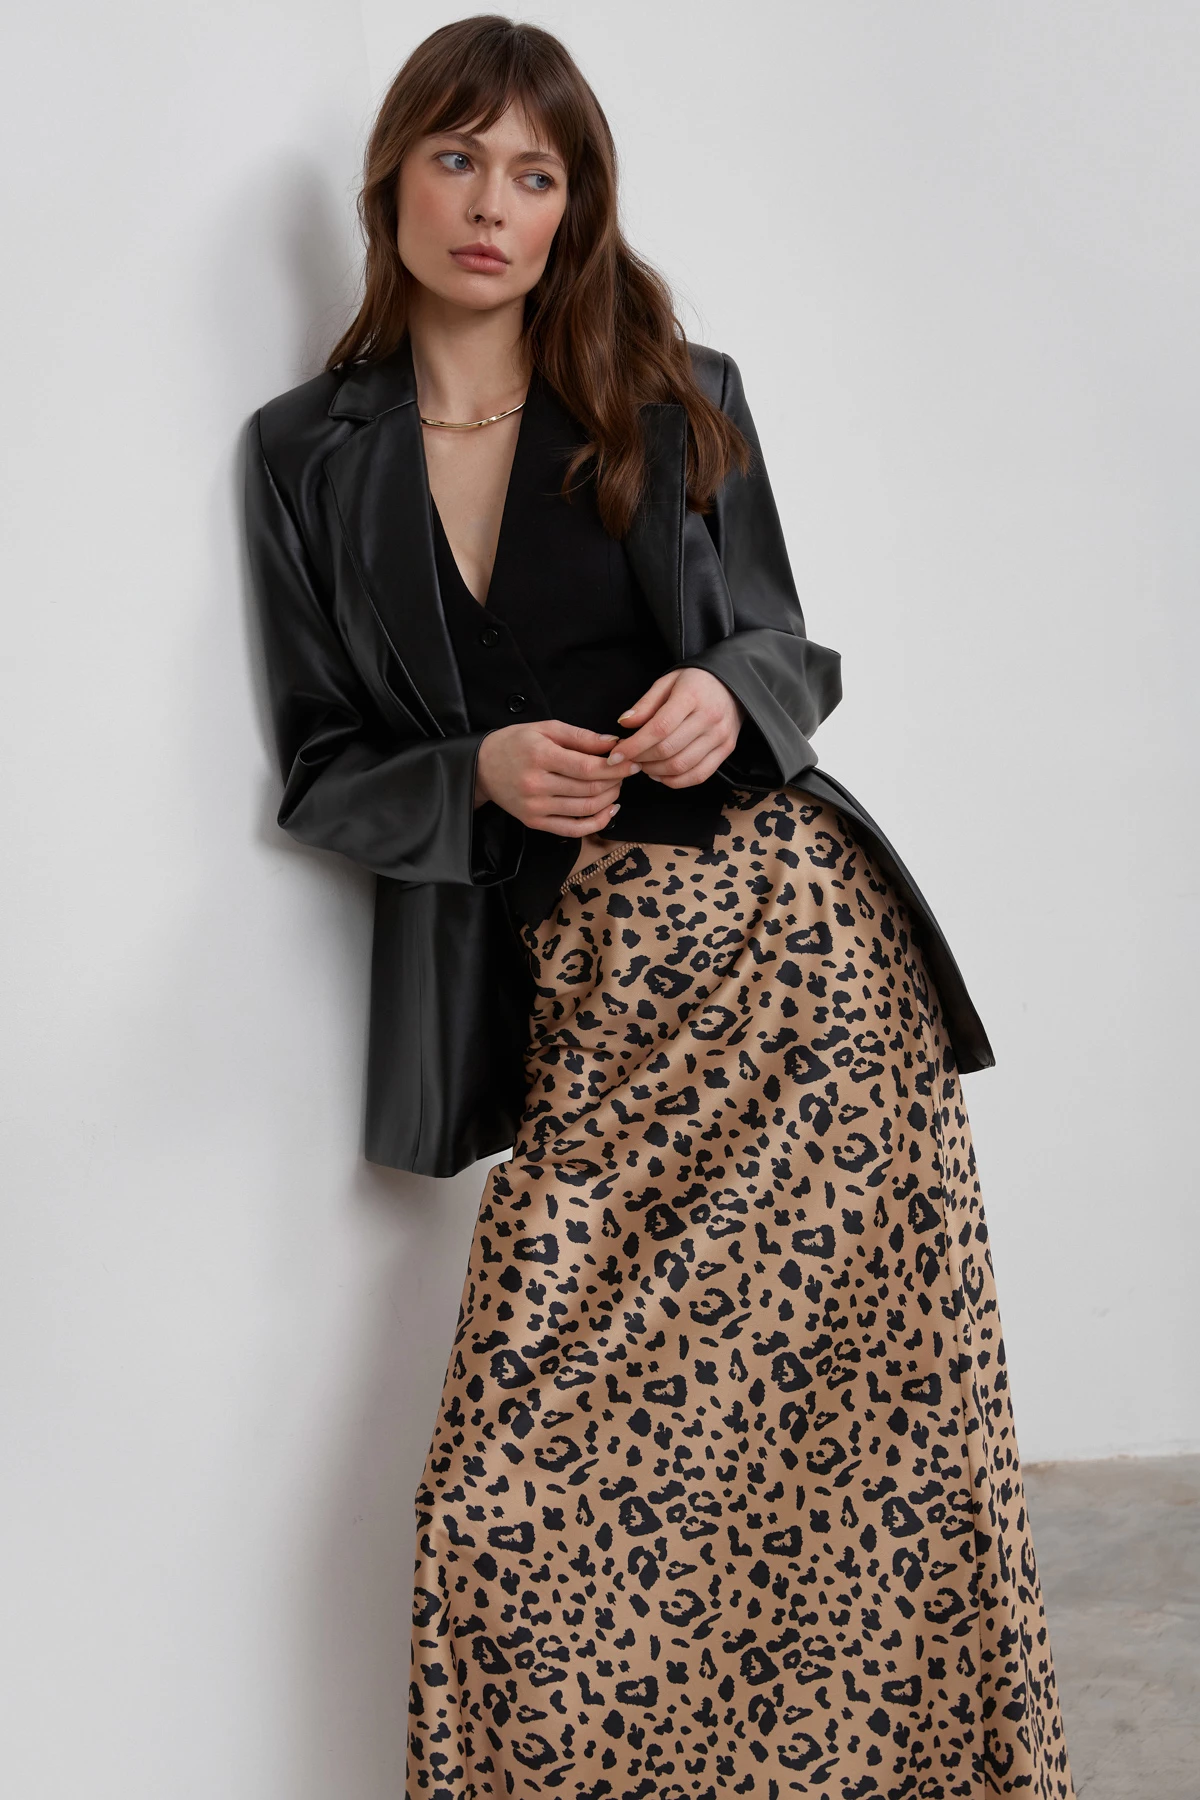 Mid-length satin skirt in leopard print, photo 6